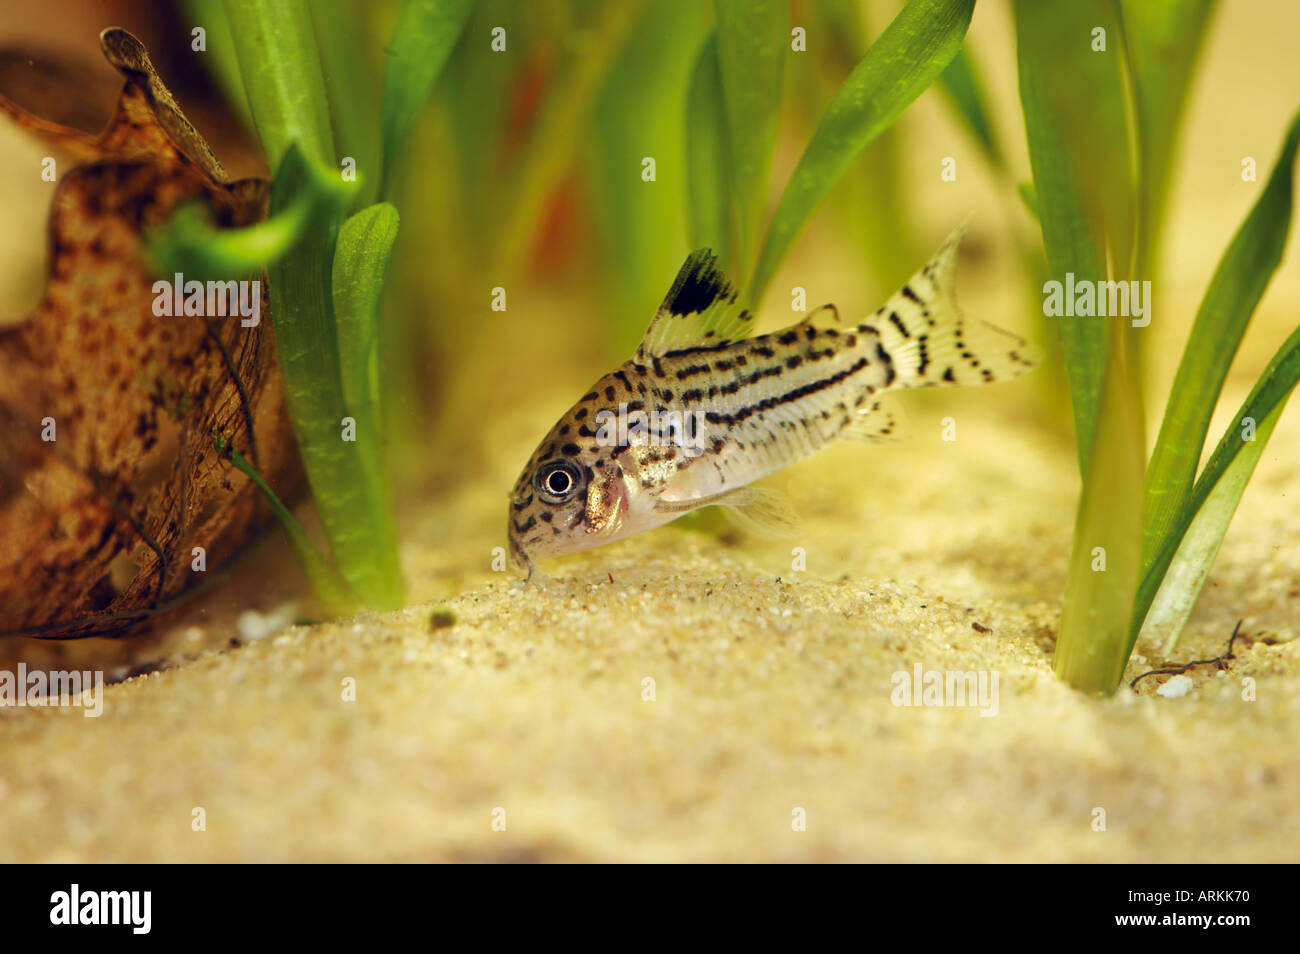 Leopard catfish (Corydoras julii). Dingle fish swimming in anaquarium Stock Photo